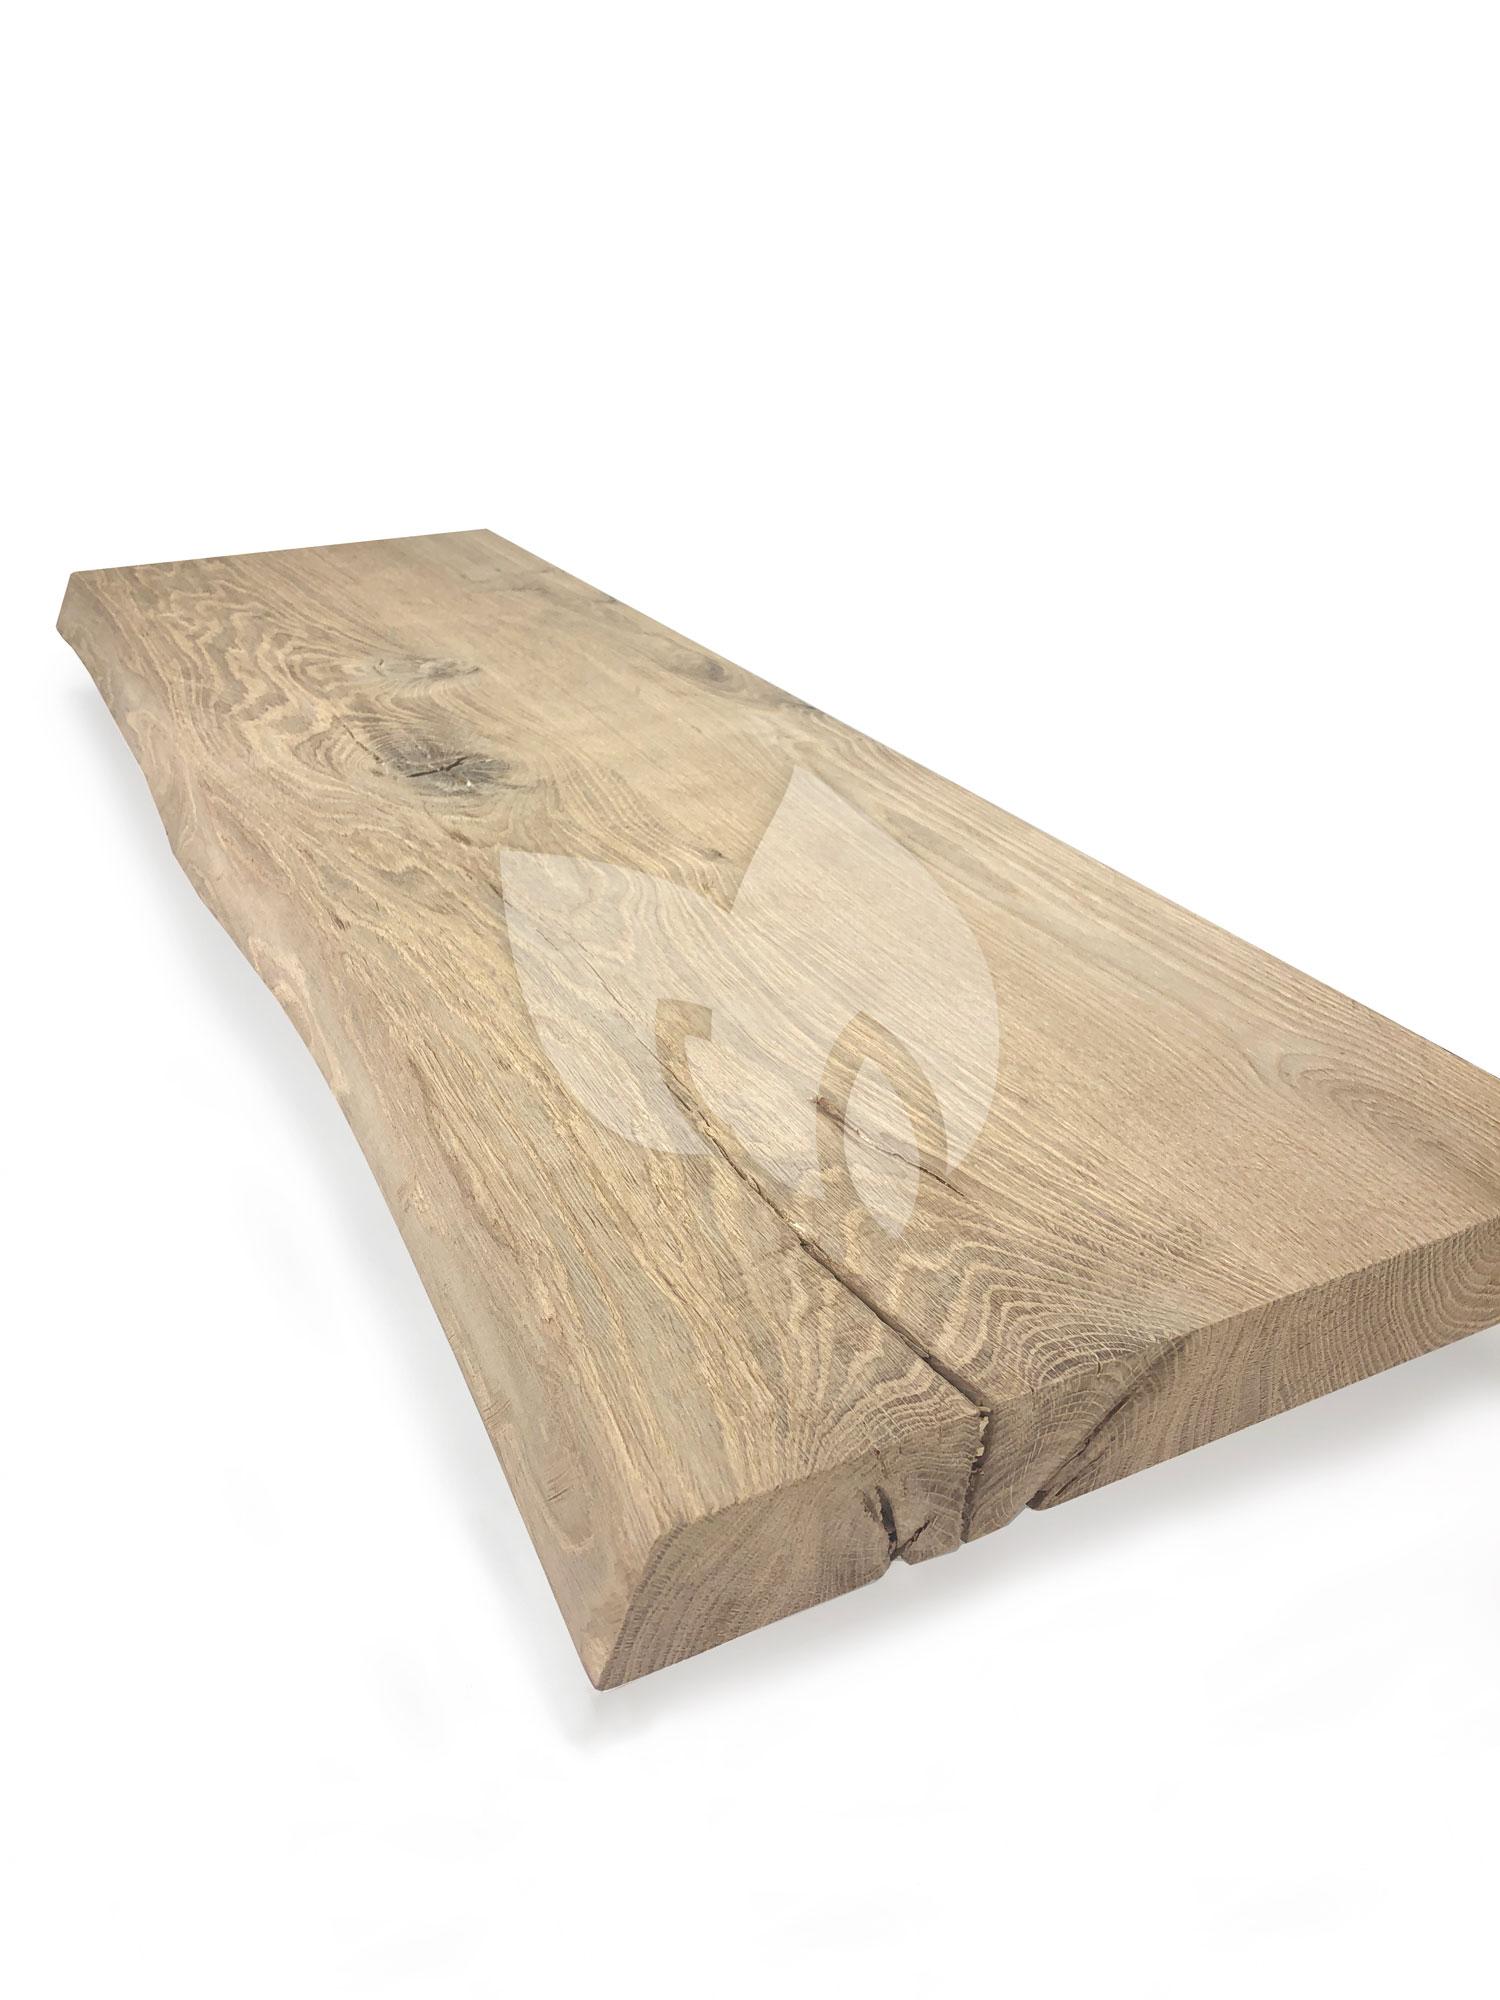 Dader Druif rundvlees Wood Brothers Oud eiken plank massief boomstam 120 x 30 cm | Tuinexpress.nl